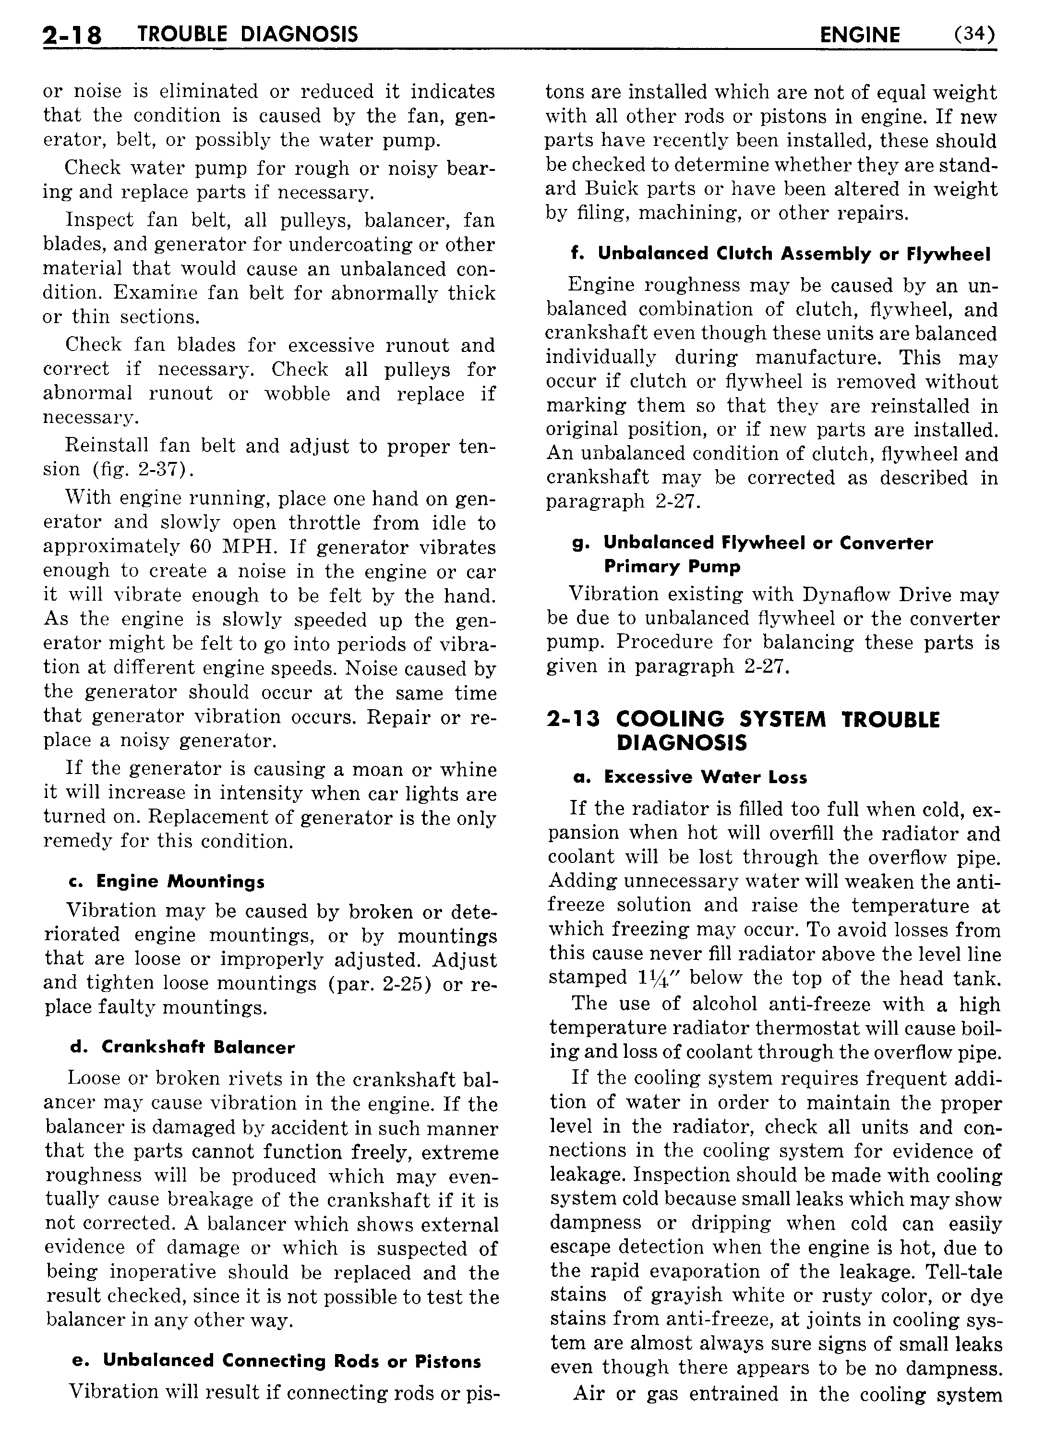 n_03 1956 Buick Shop Manual - Engine-018-018.jpg